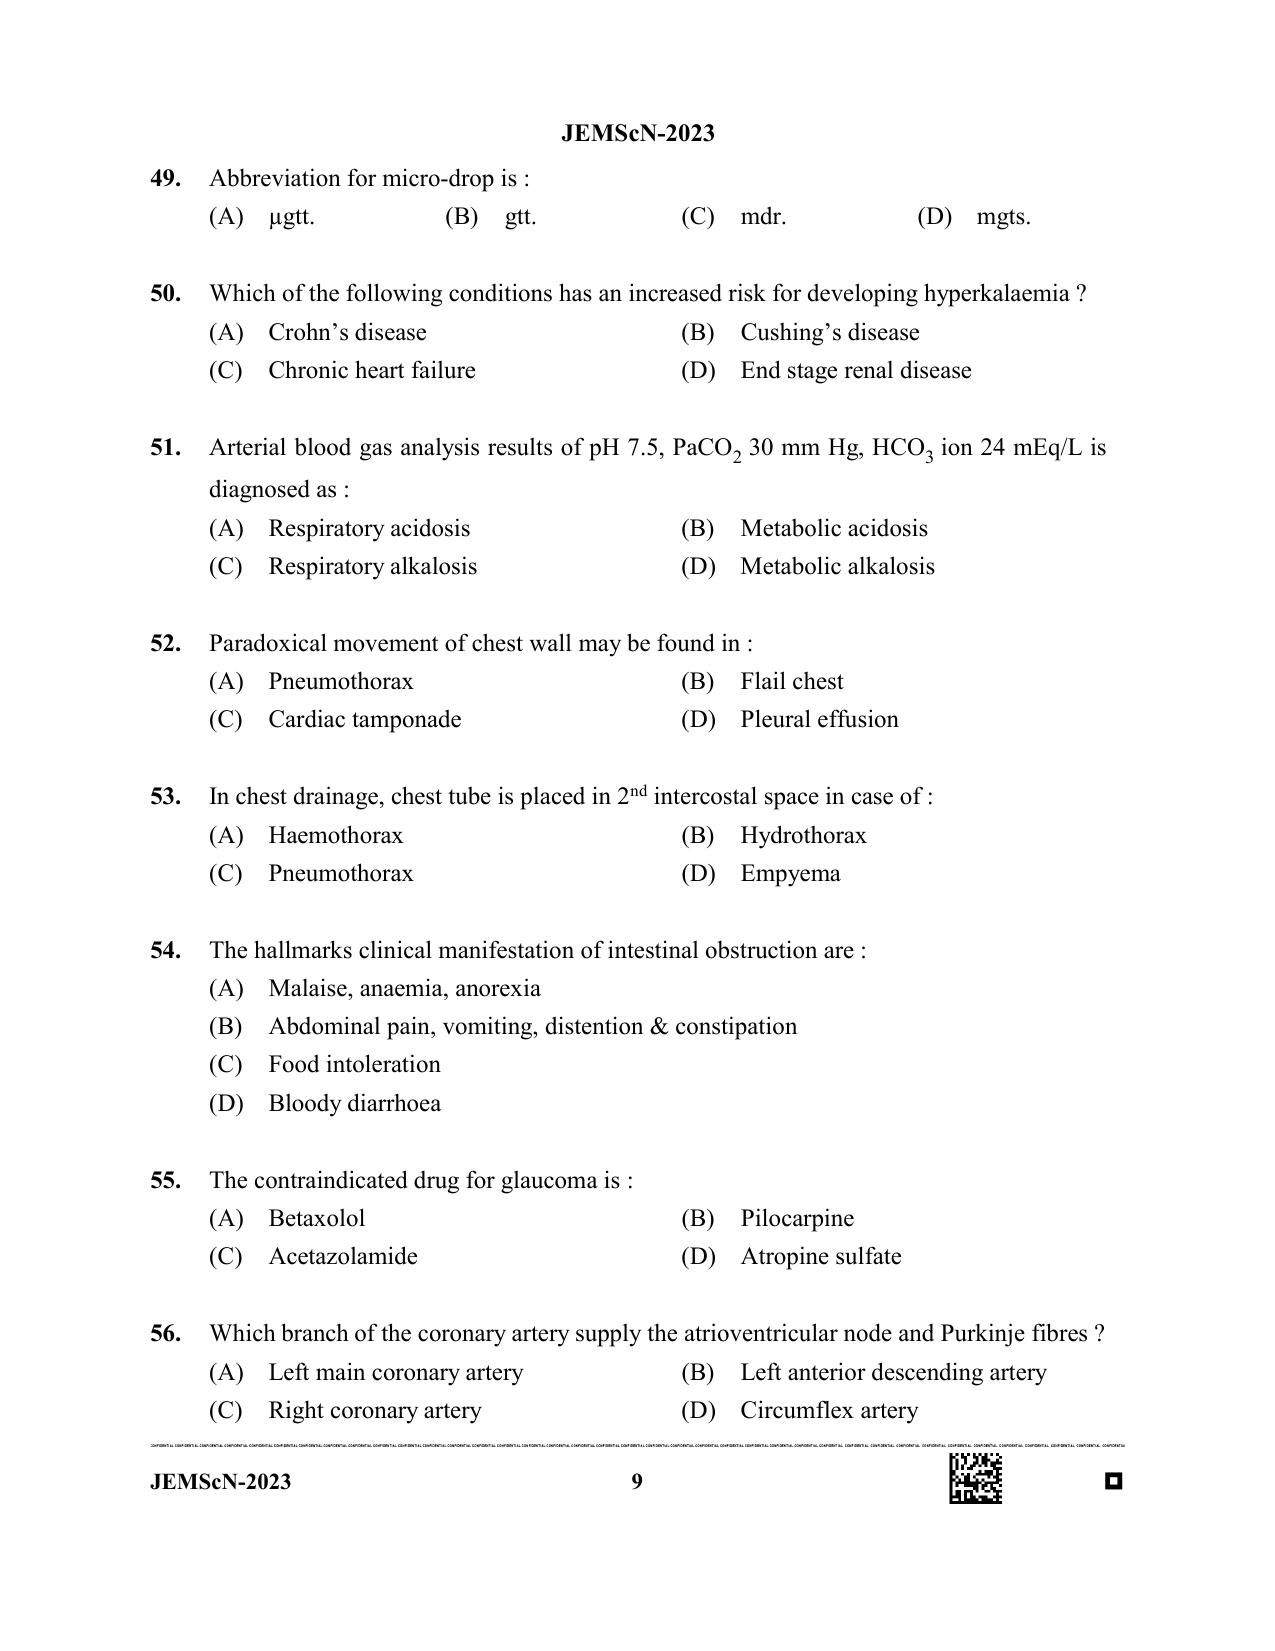 WB JEMScN 2023 Question Paper - Page 9